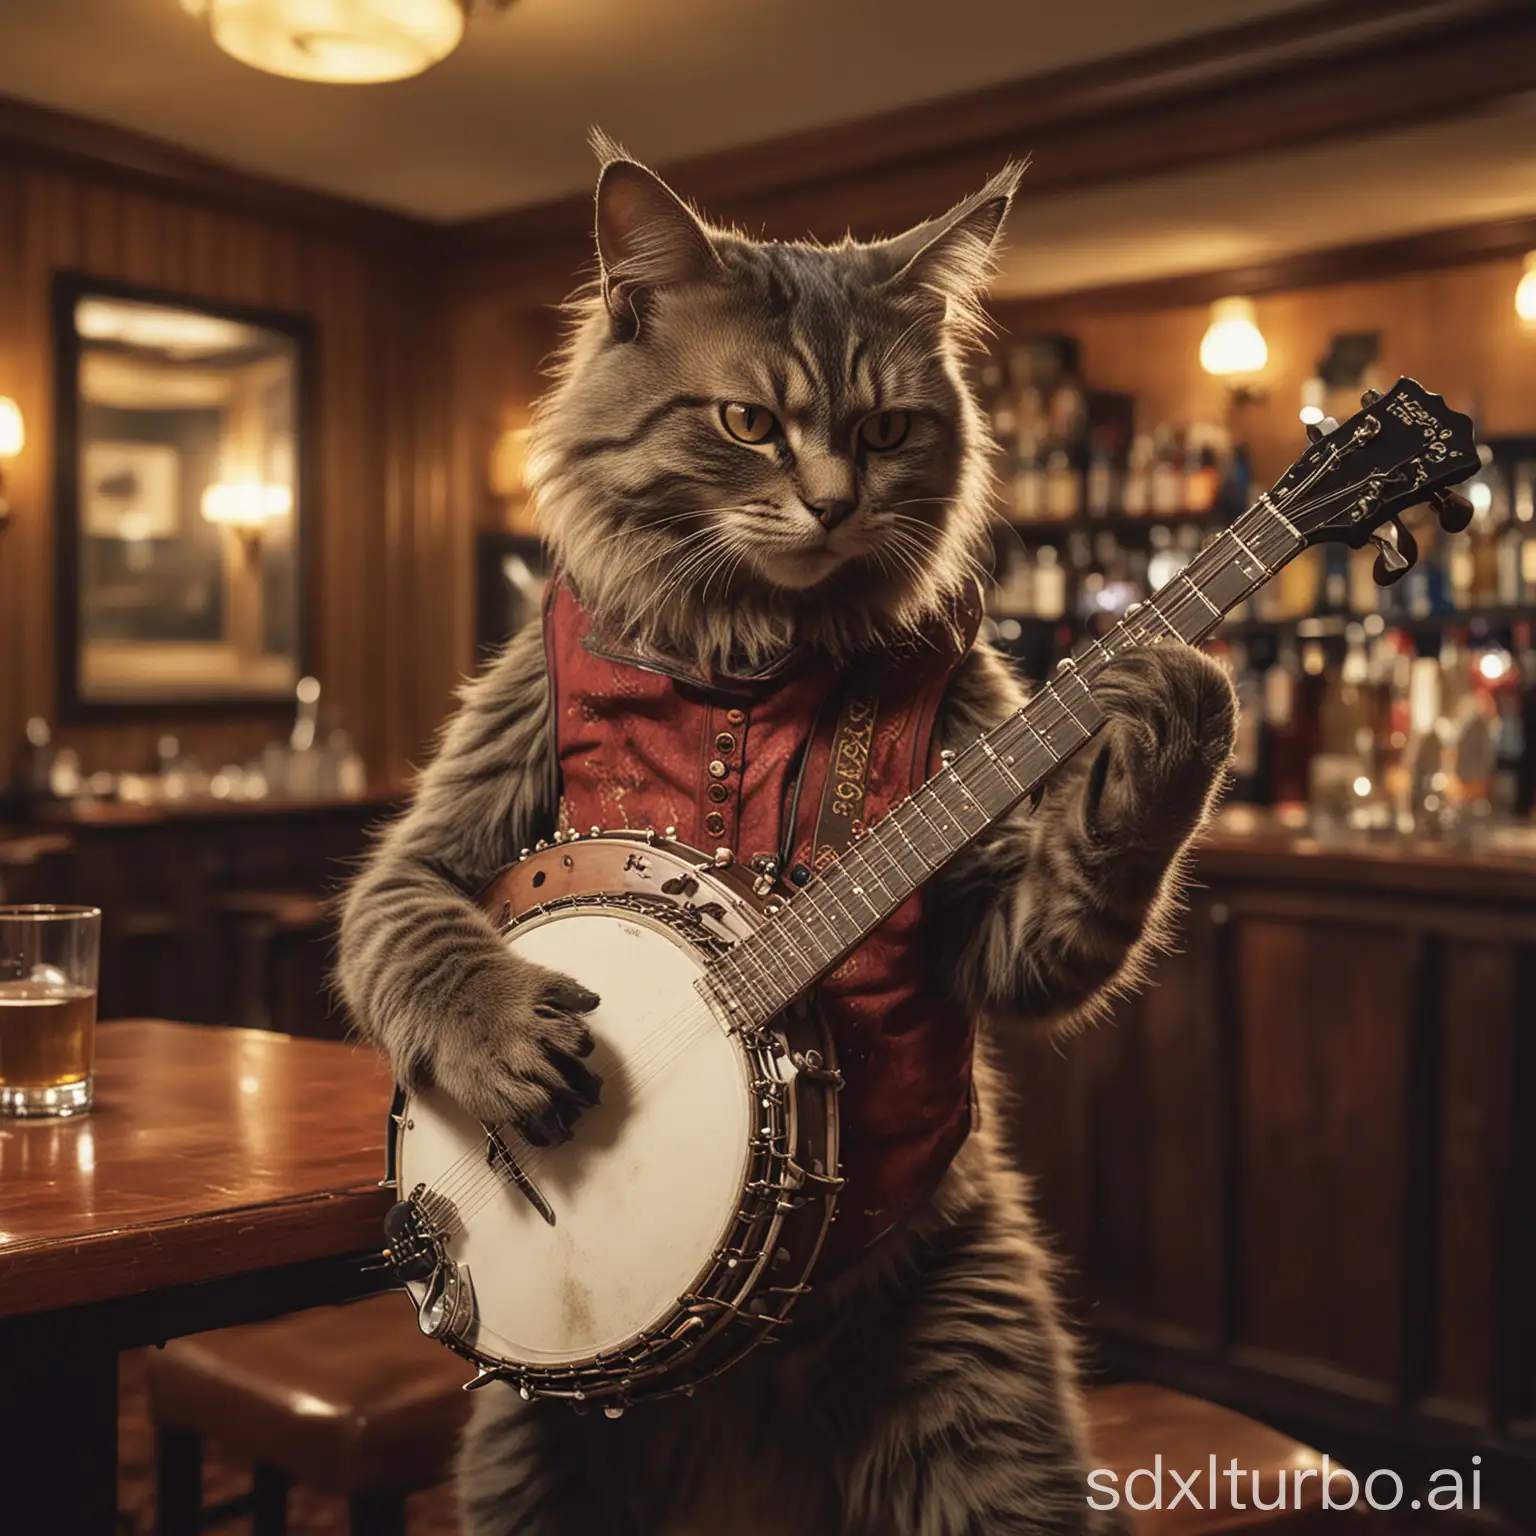 Demon-Cat-Playing-Banjo-in-Hotel-Bar